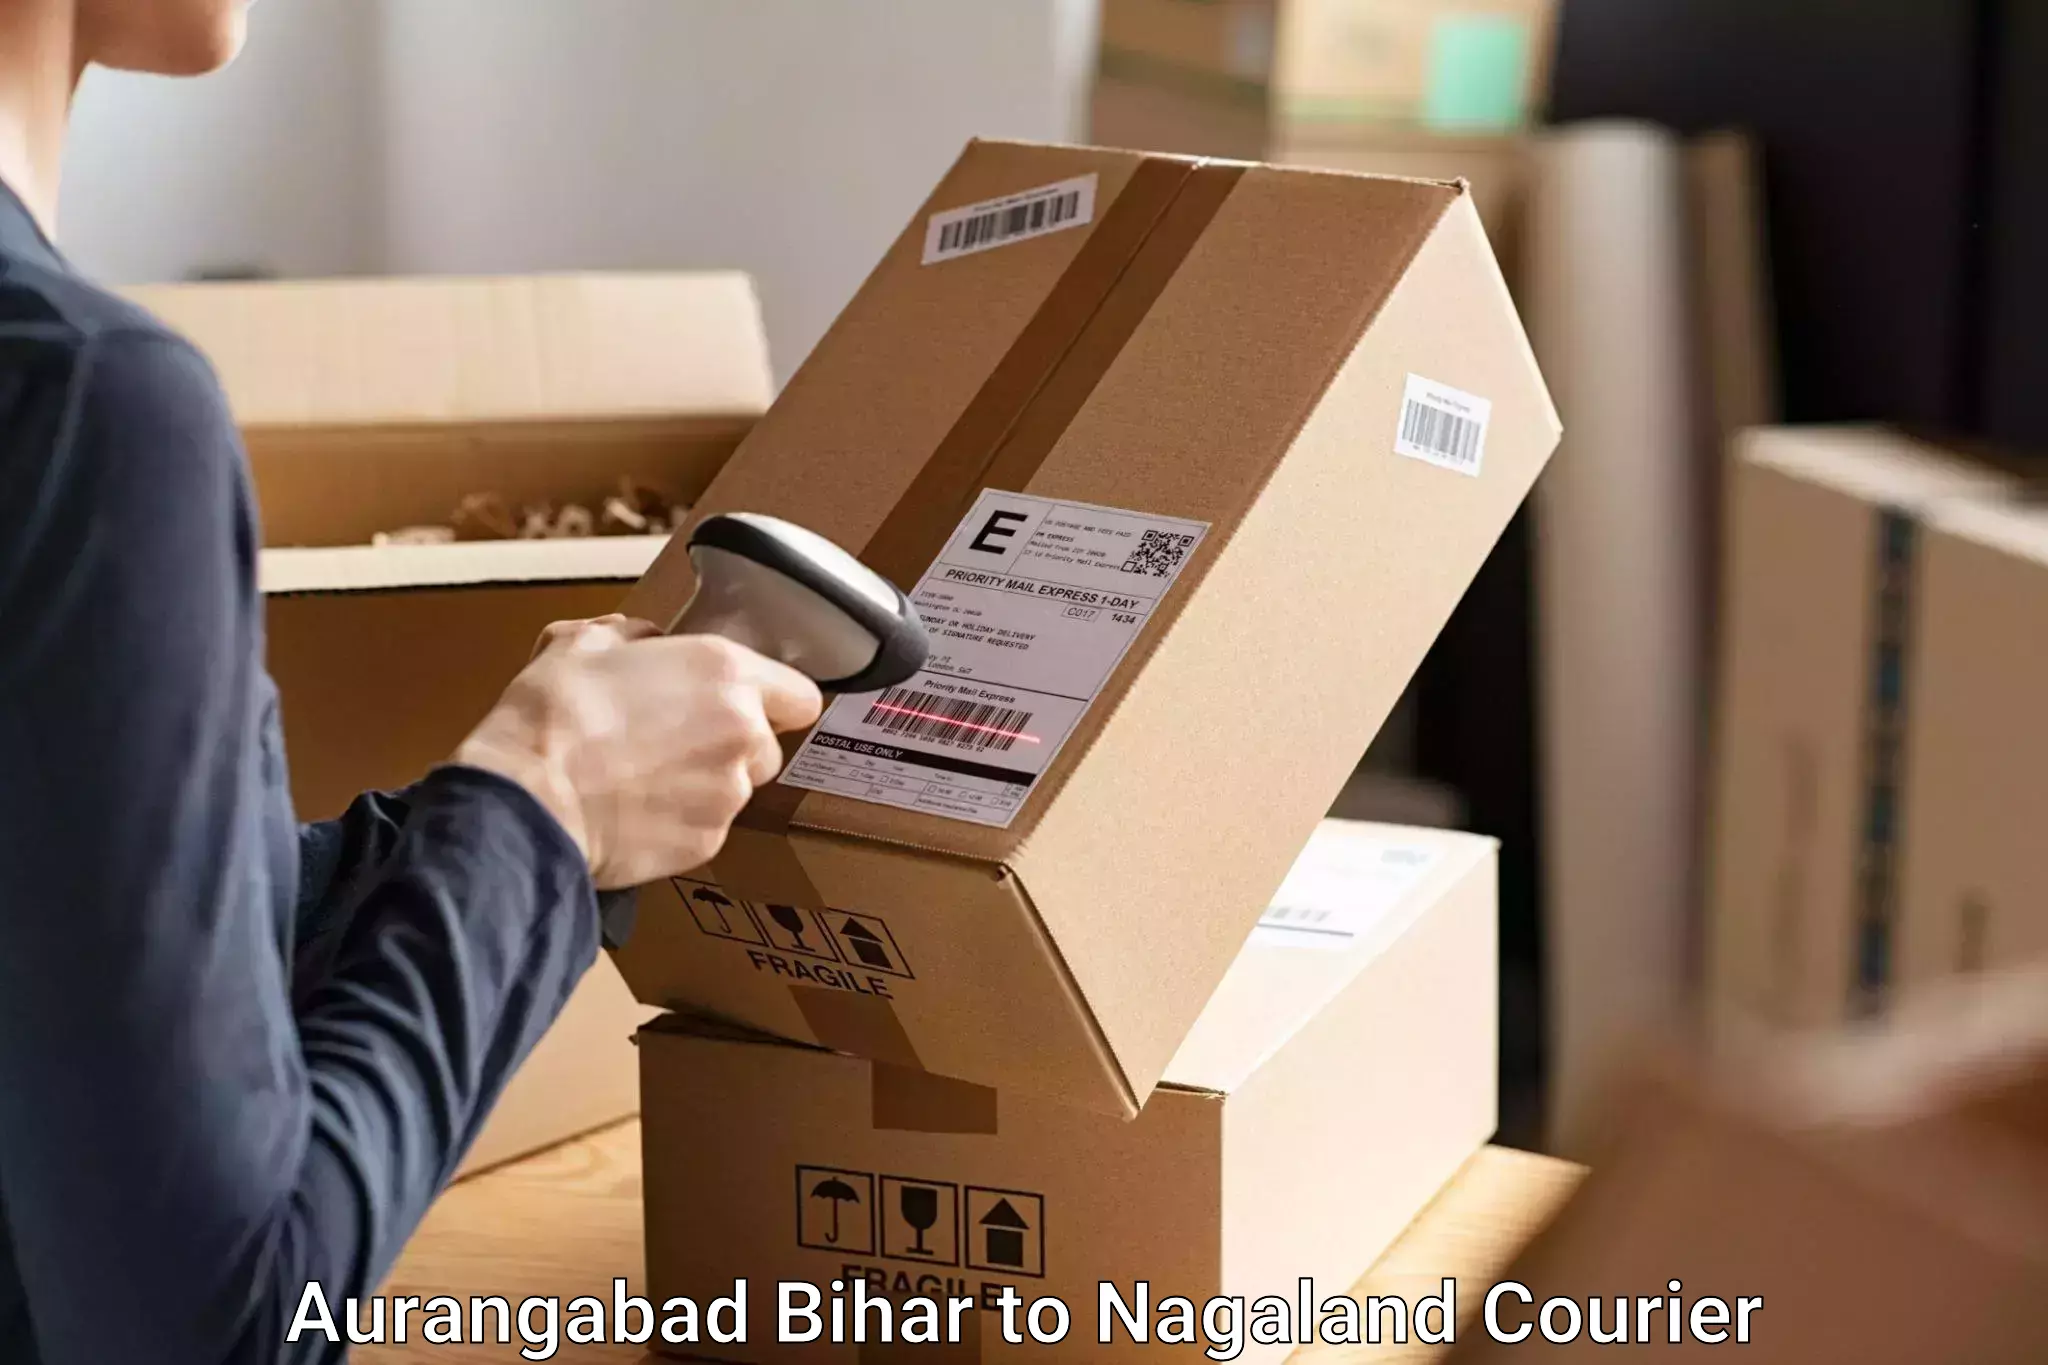 Luggage shipping specialists Aurangabad Bihar to Nagaland